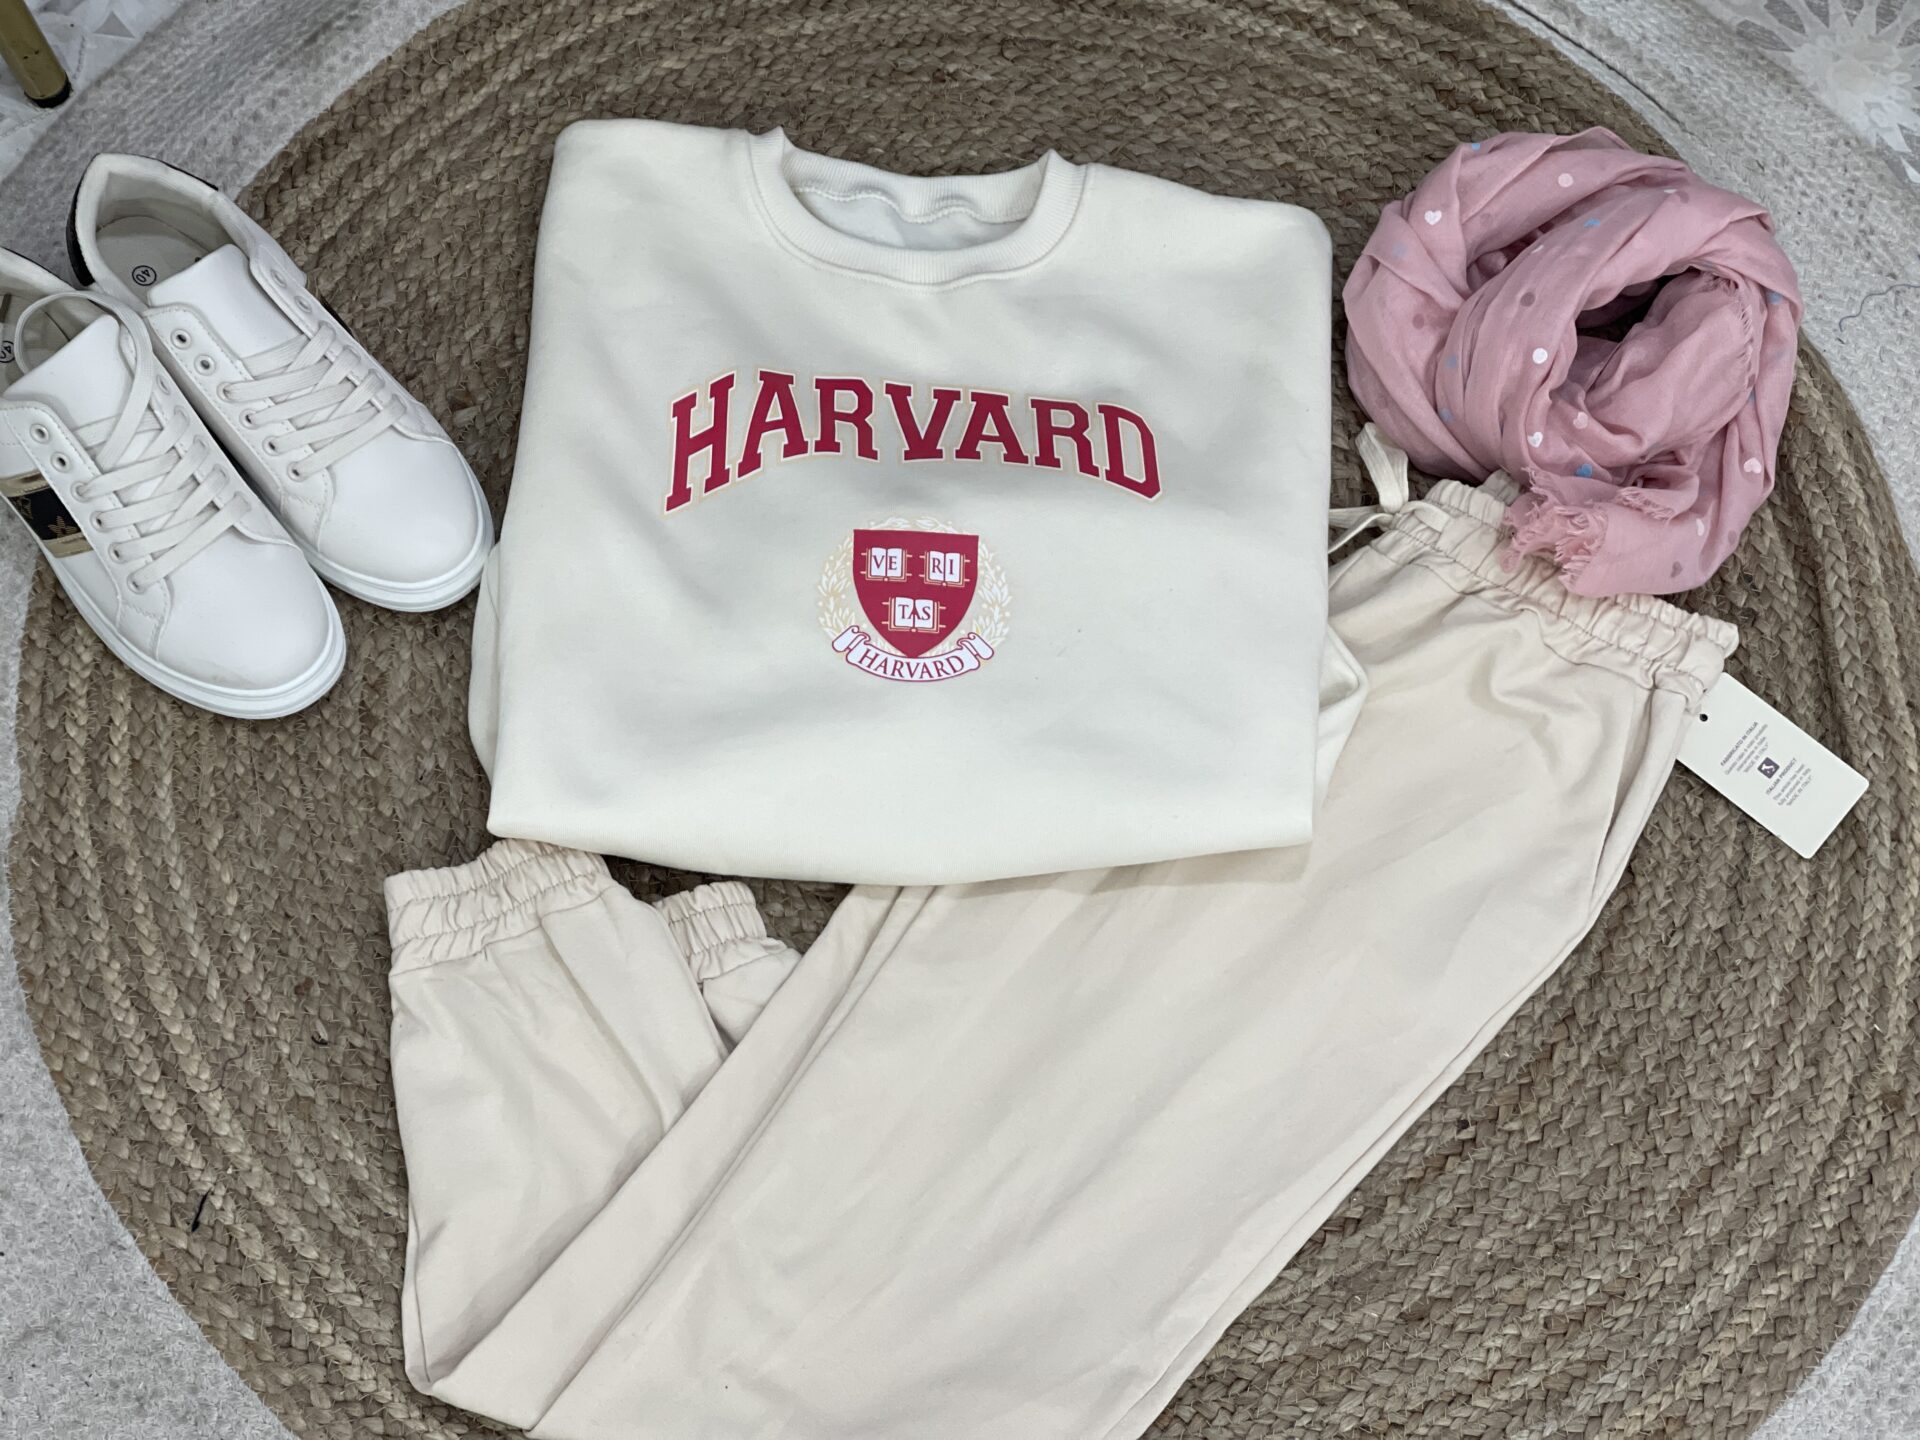 Sudadera Harvard